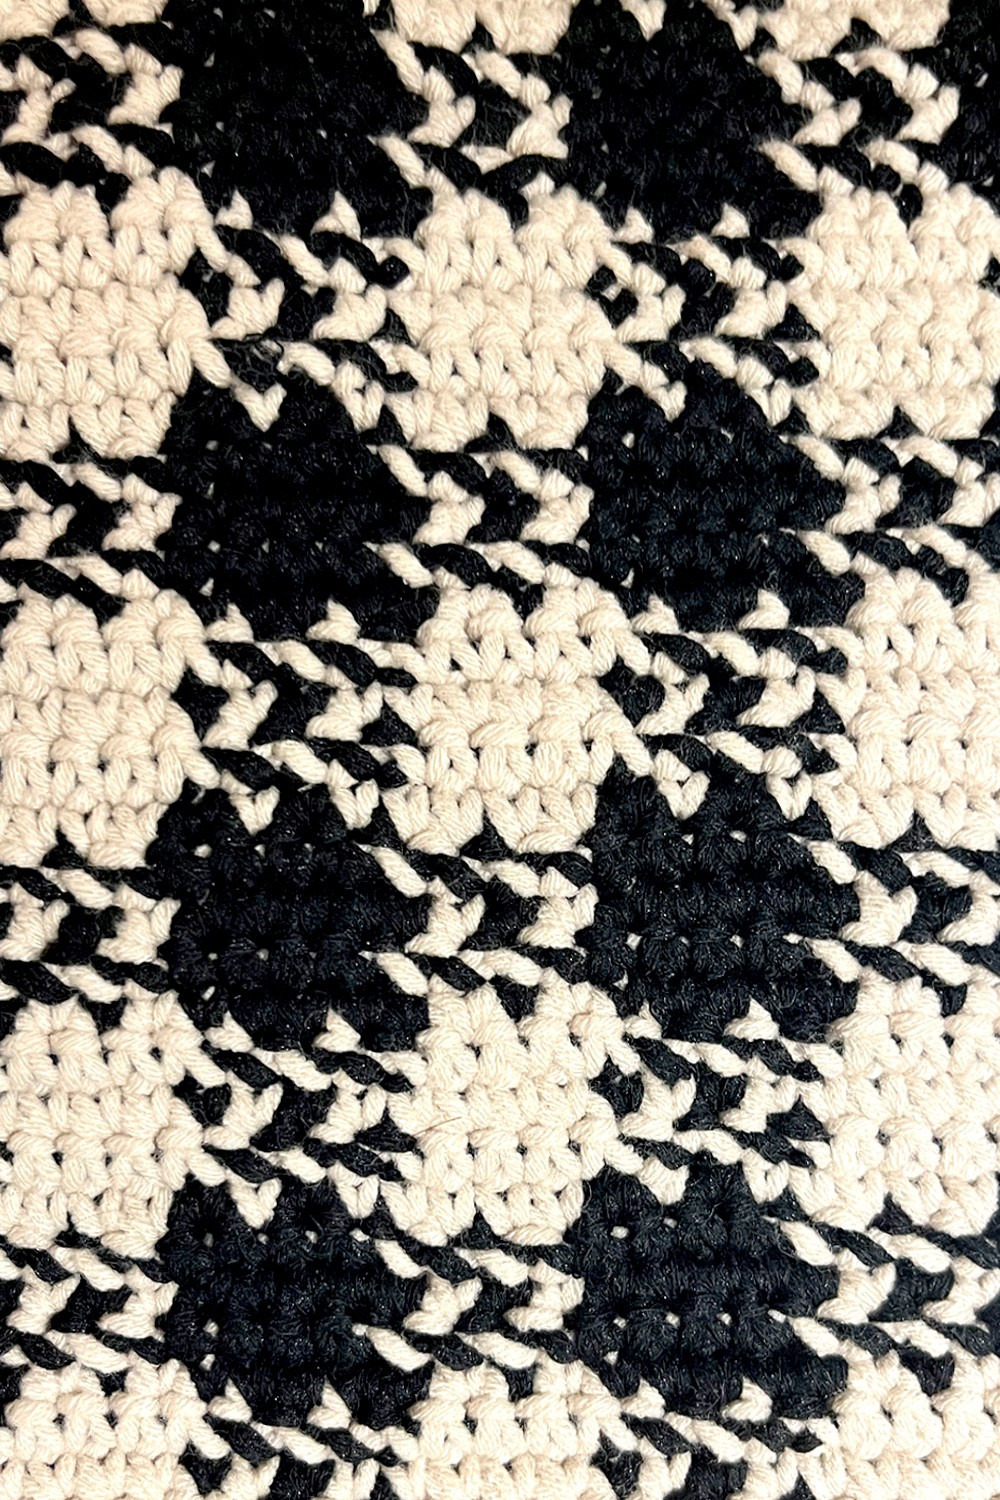 Eco Leather Crochet 2way バッグC 詳細画像 ブラック 3